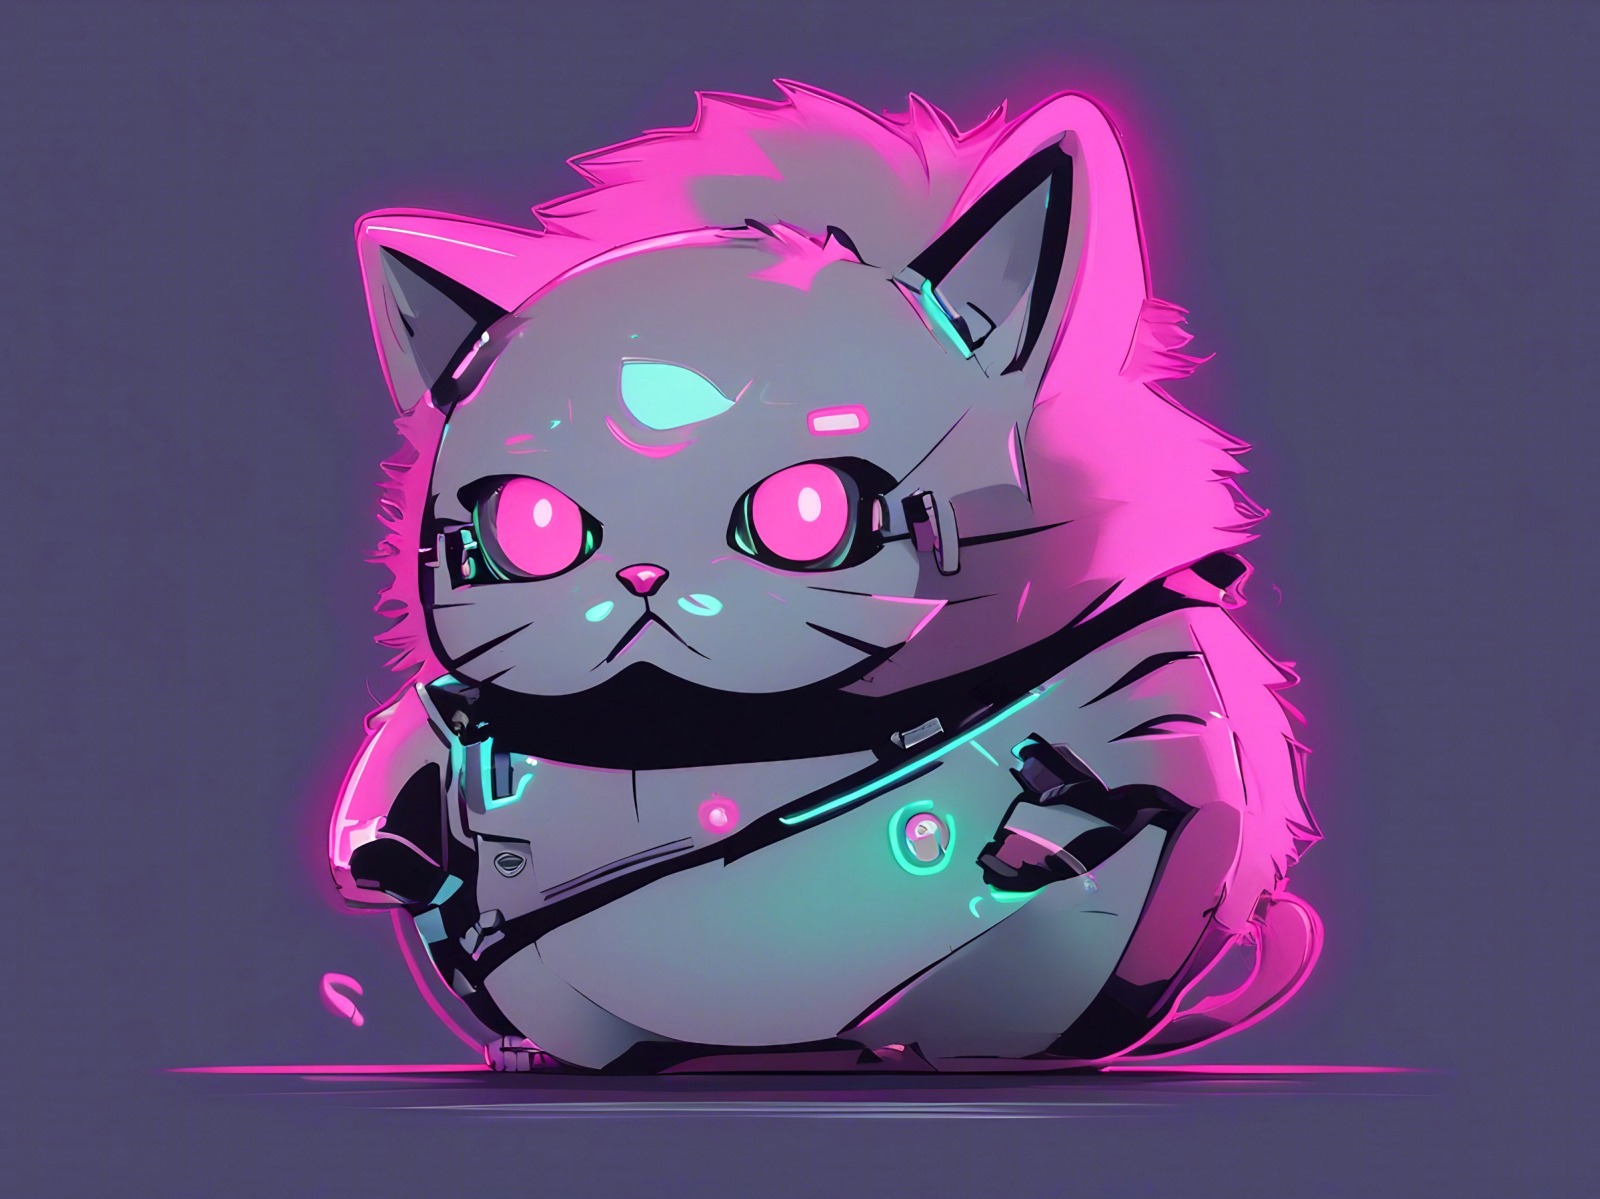 Dicke Chibi Cyberpunk Katze im Neon-Future Style Mini Foto-Poster - 27x20 cm